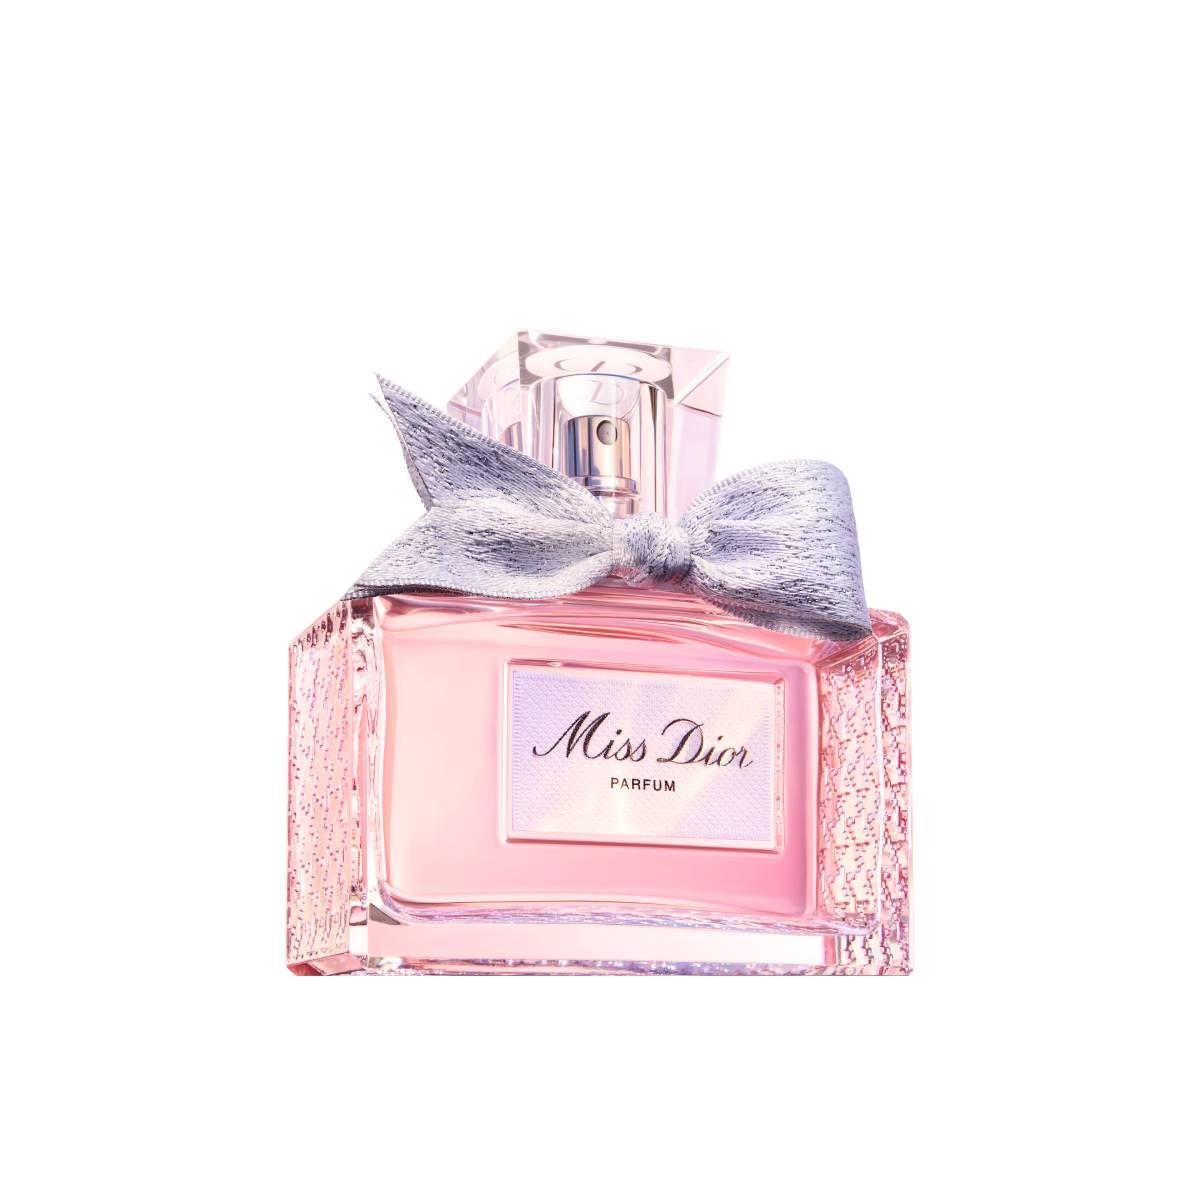 Miss Dior Parfum, de Dior